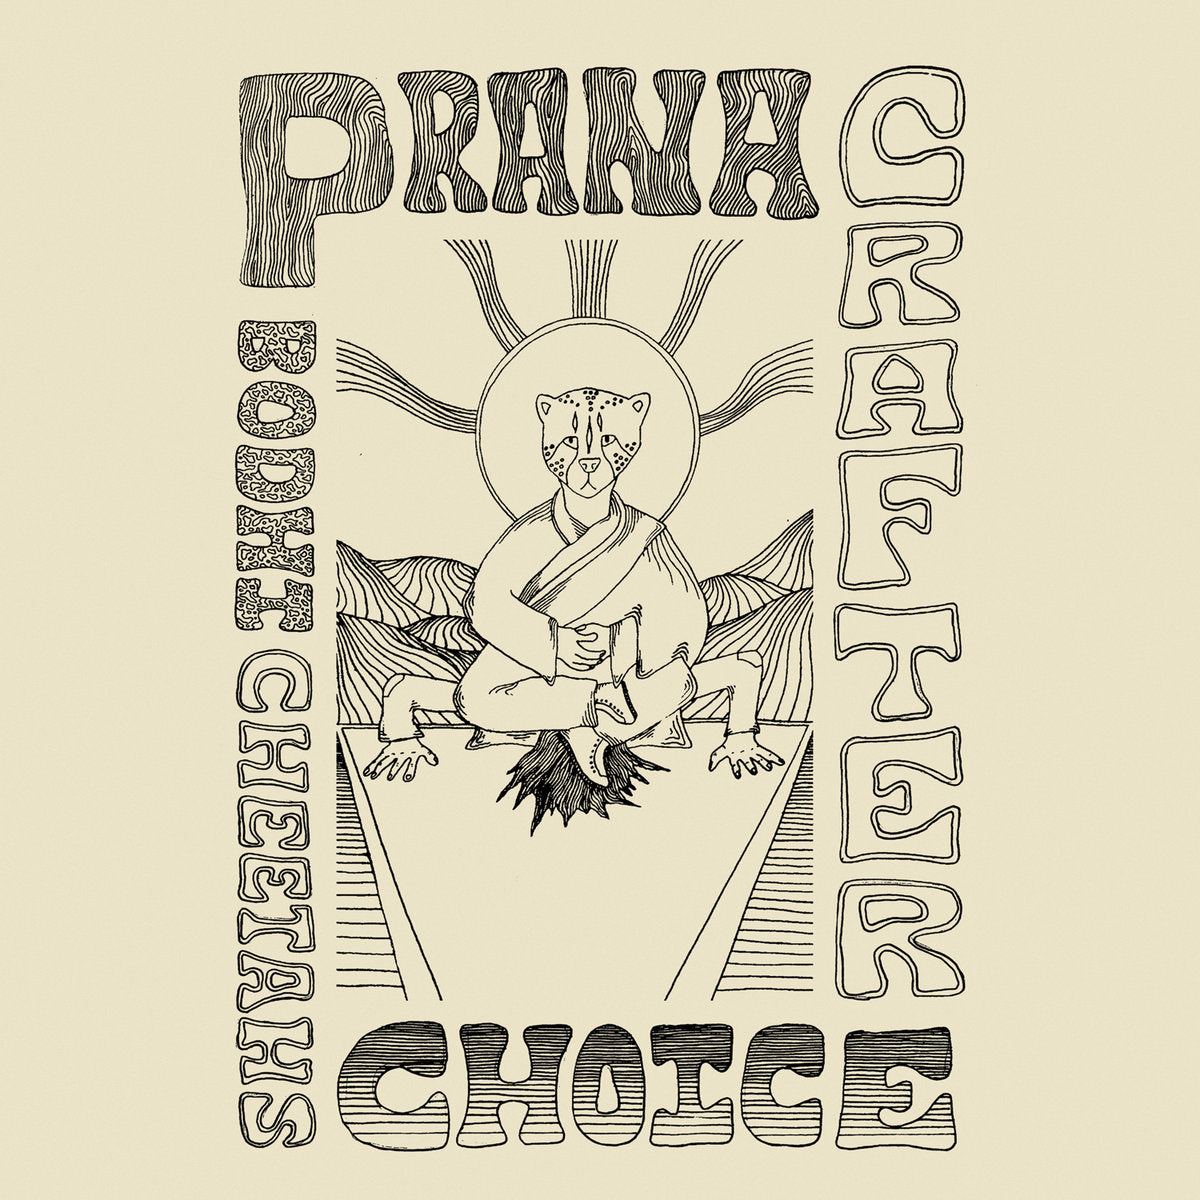 Prana Crafter - Bodhi Cheetah's Choice LP